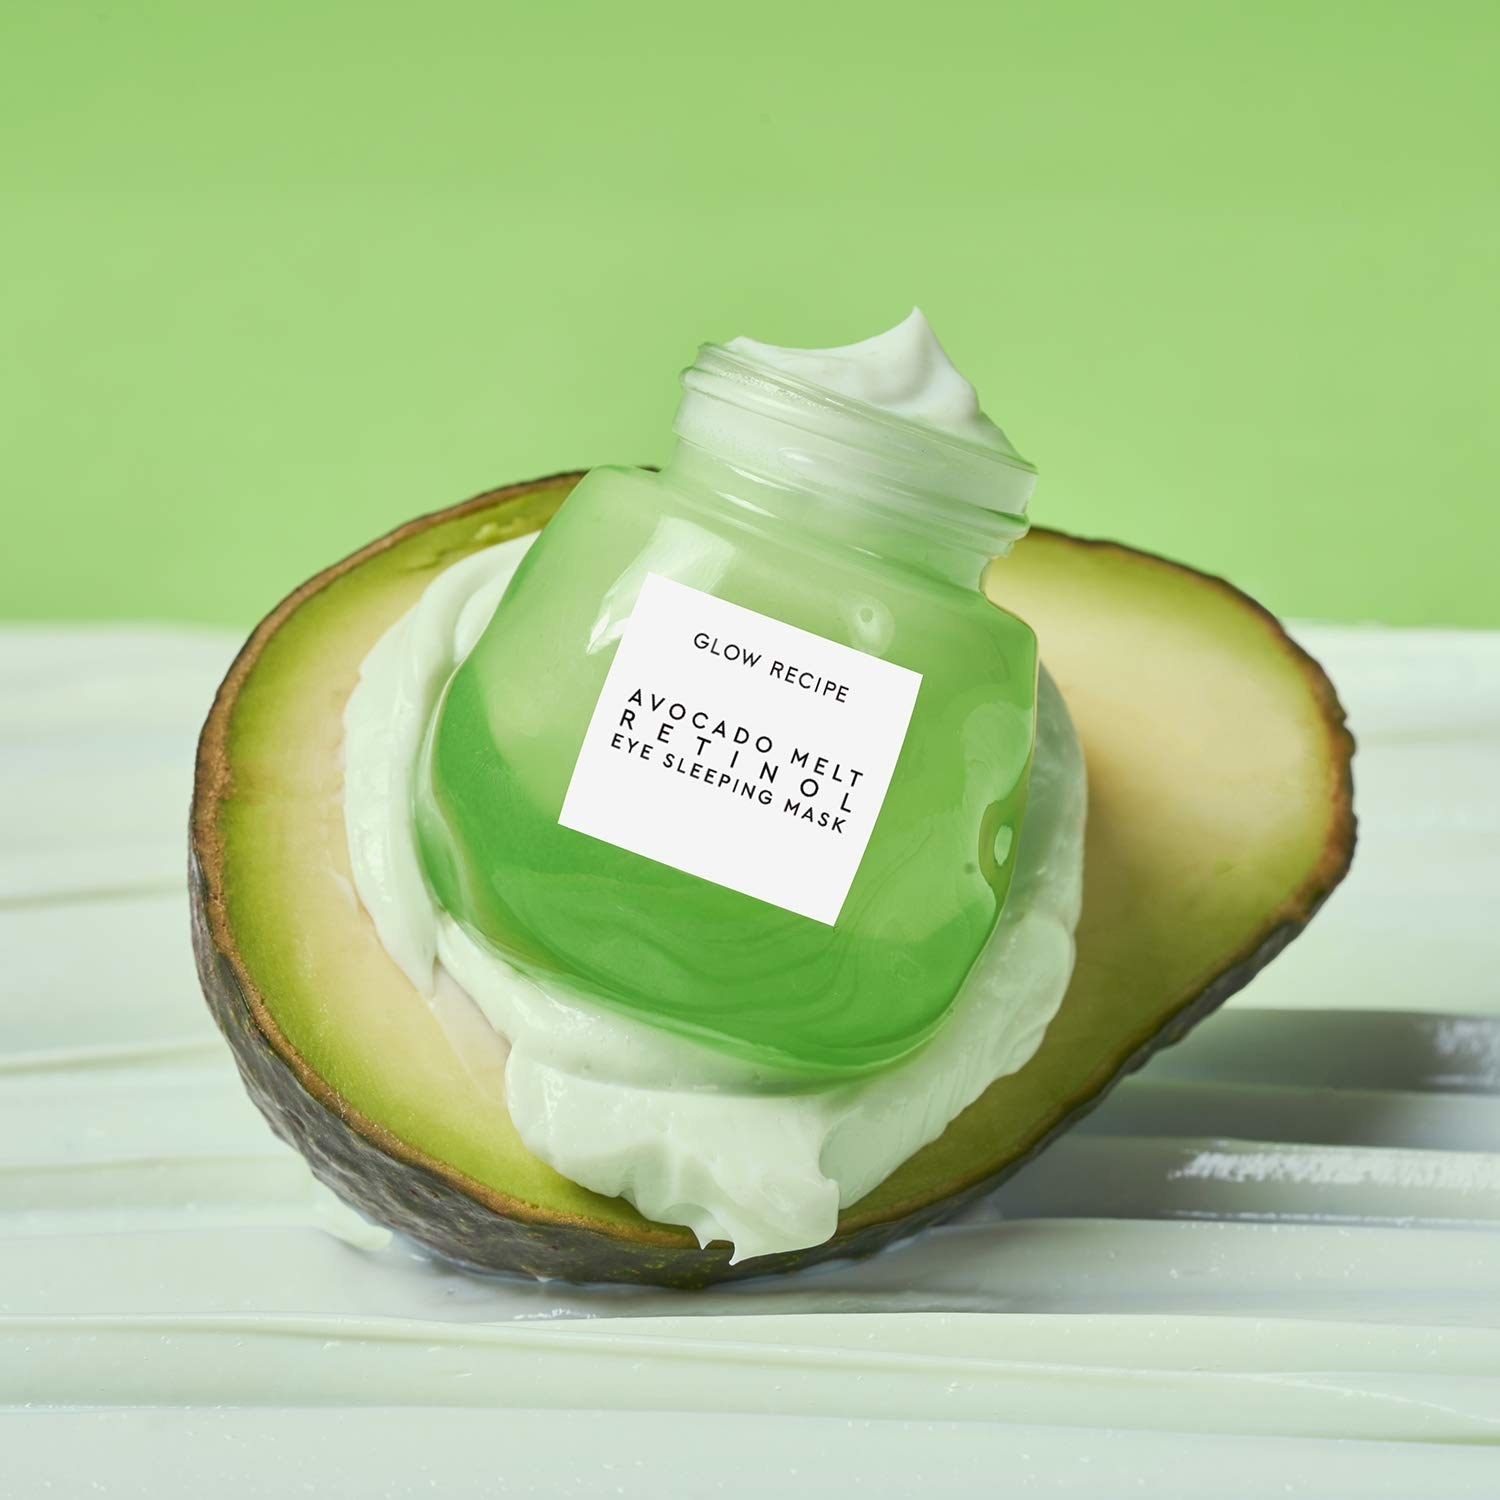 A small jar of the Glow Recipe Avocado Melt Retinol Eye Sleeping Mask is nestled into an actual avocado.